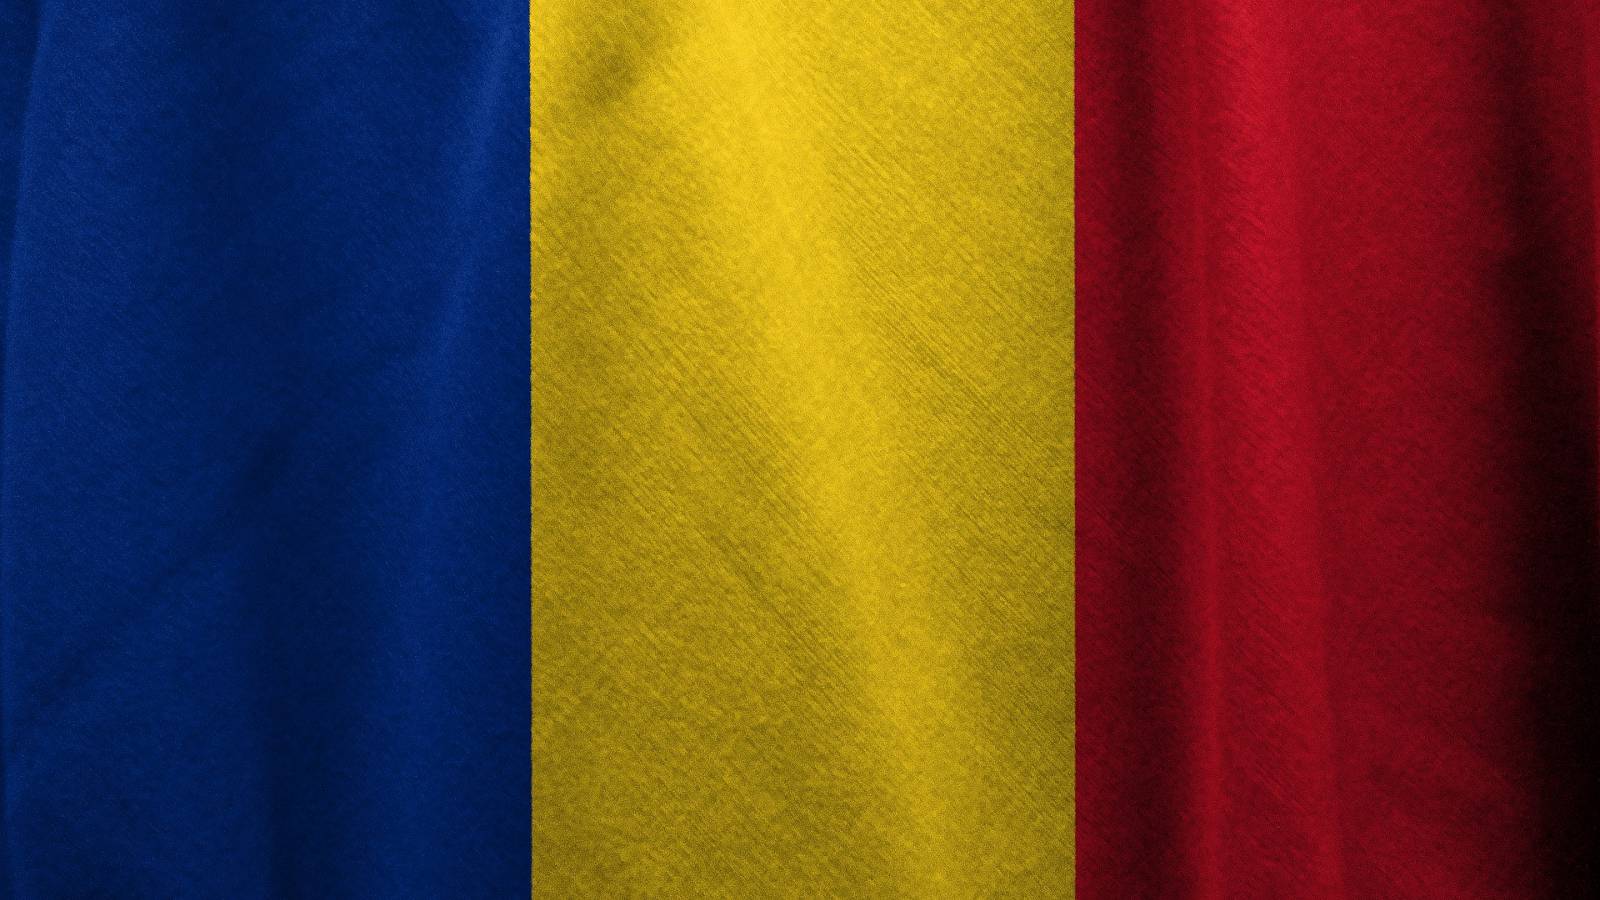 Exercitiile Armatei Romane Continua in Romania cu IGSU